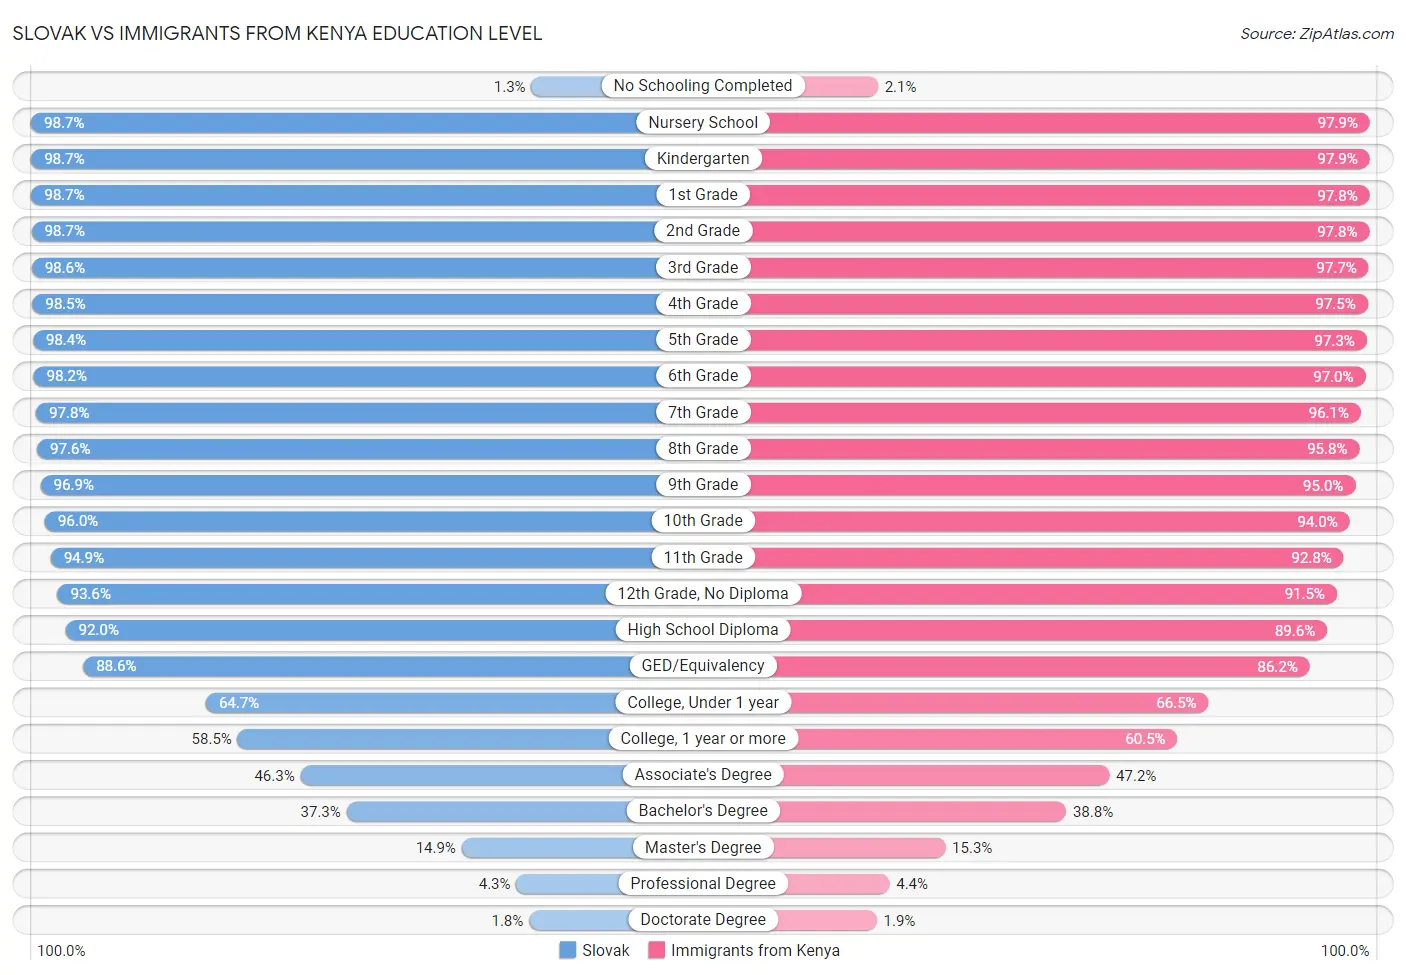 Slovak vs Immigrants from Kenya Education Level